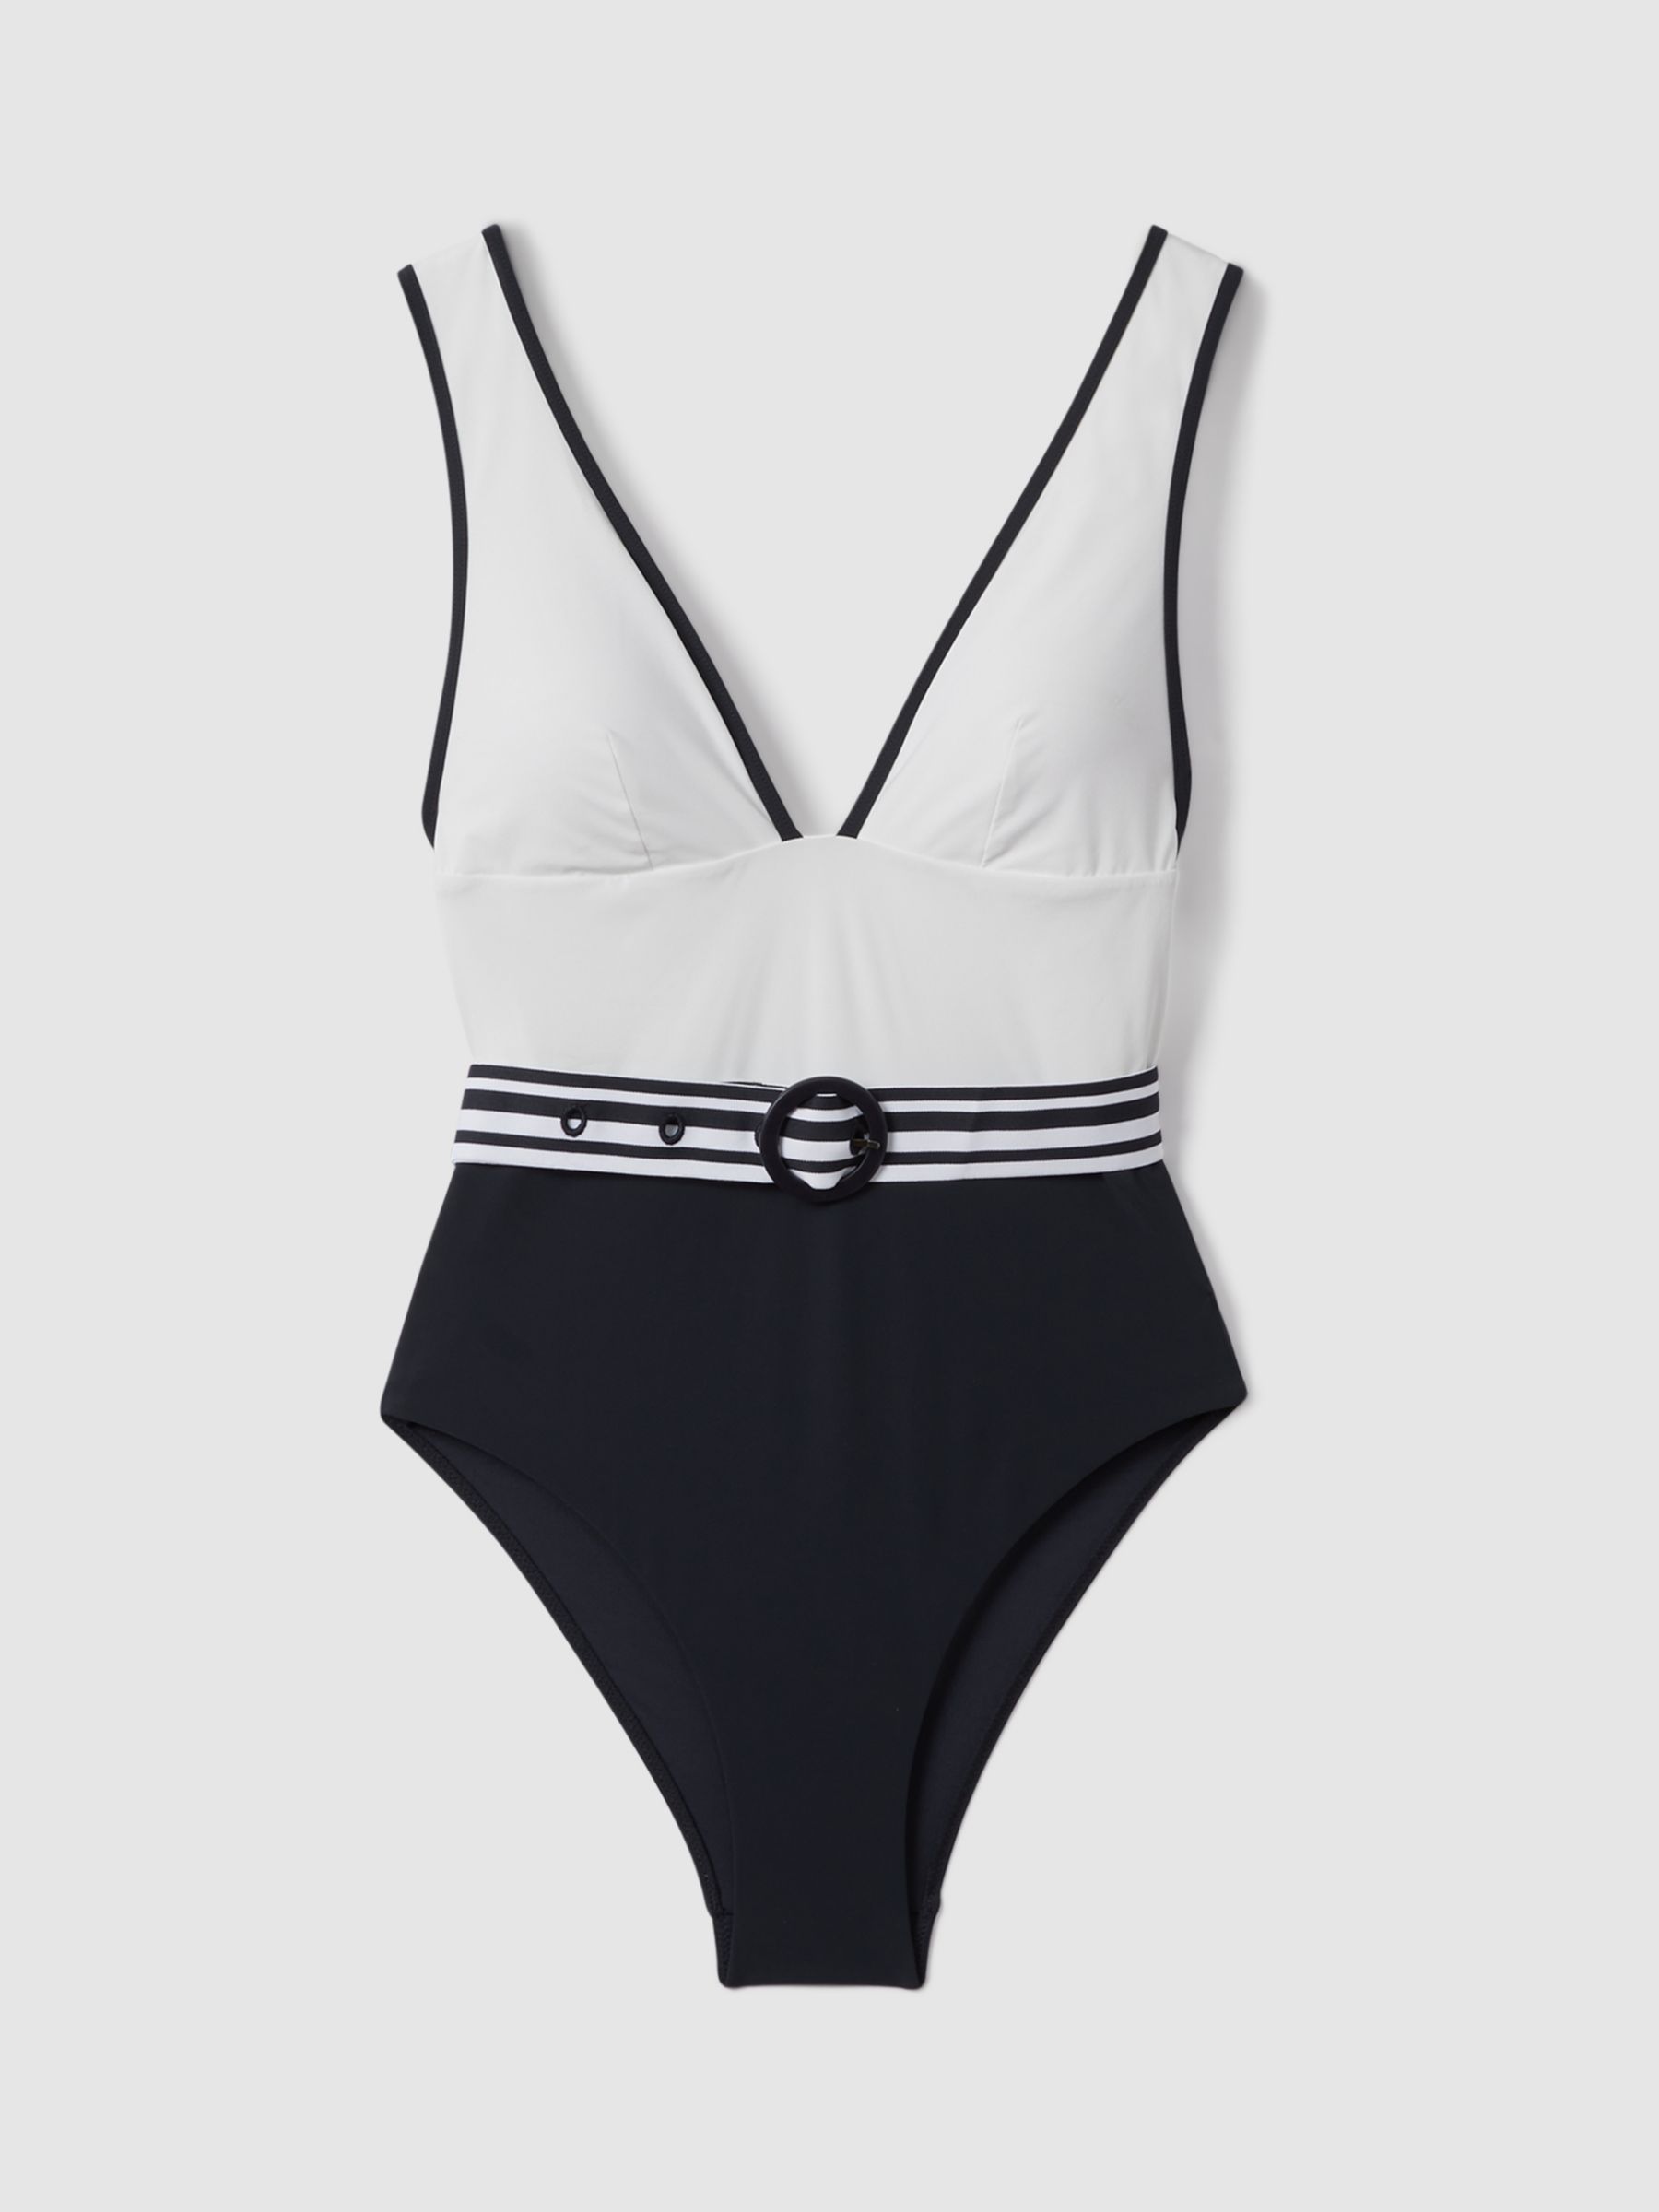 Reiss Willow Colour Block Plunge Neck Swimsuit, White/Navy, 6